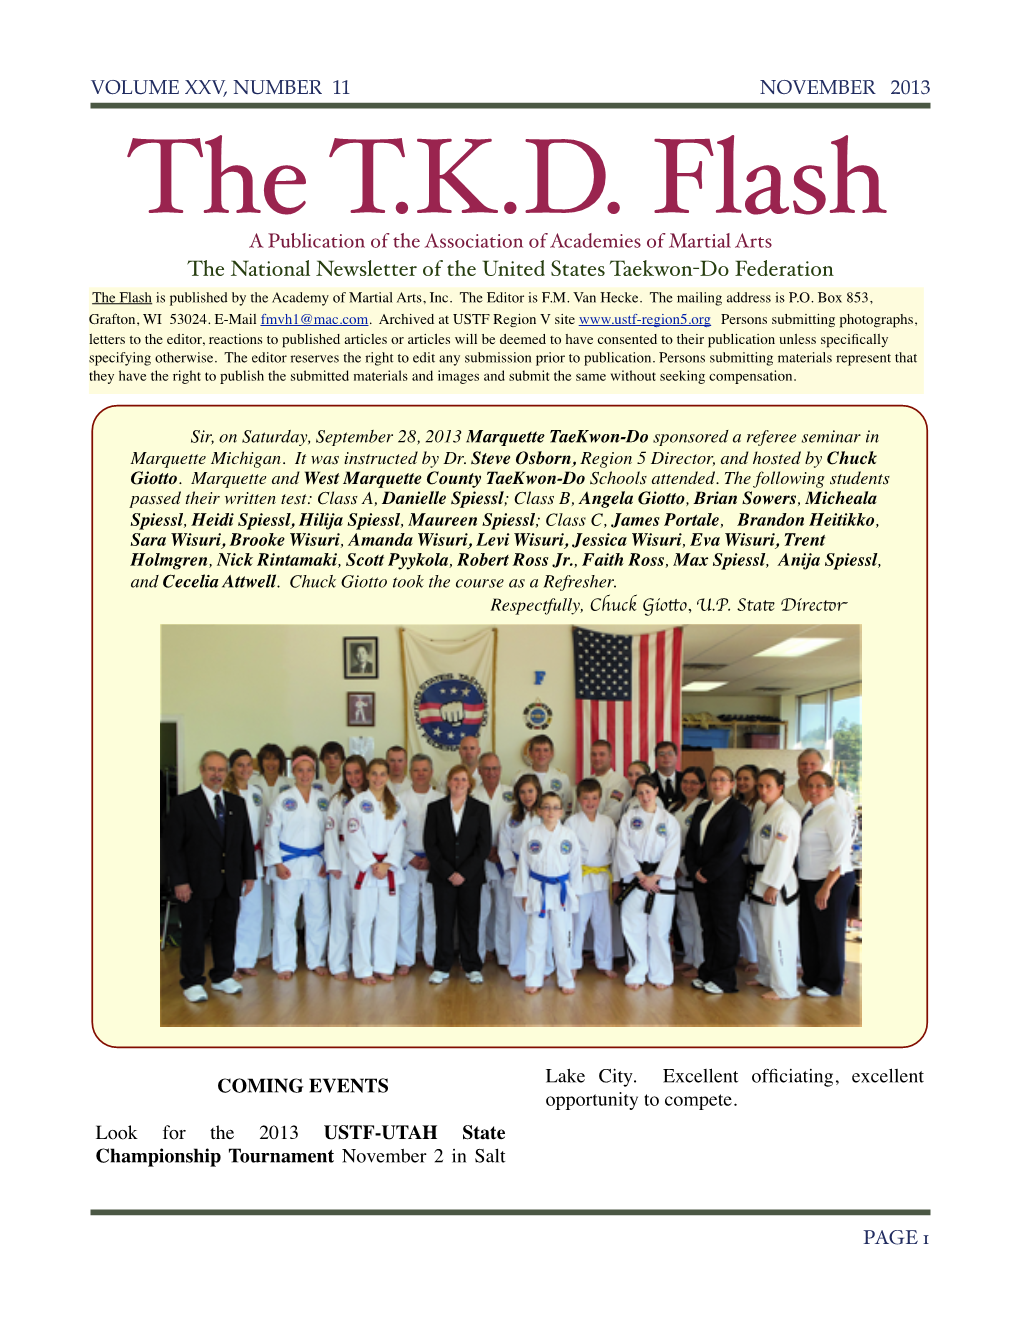 The T.K.D. Flash